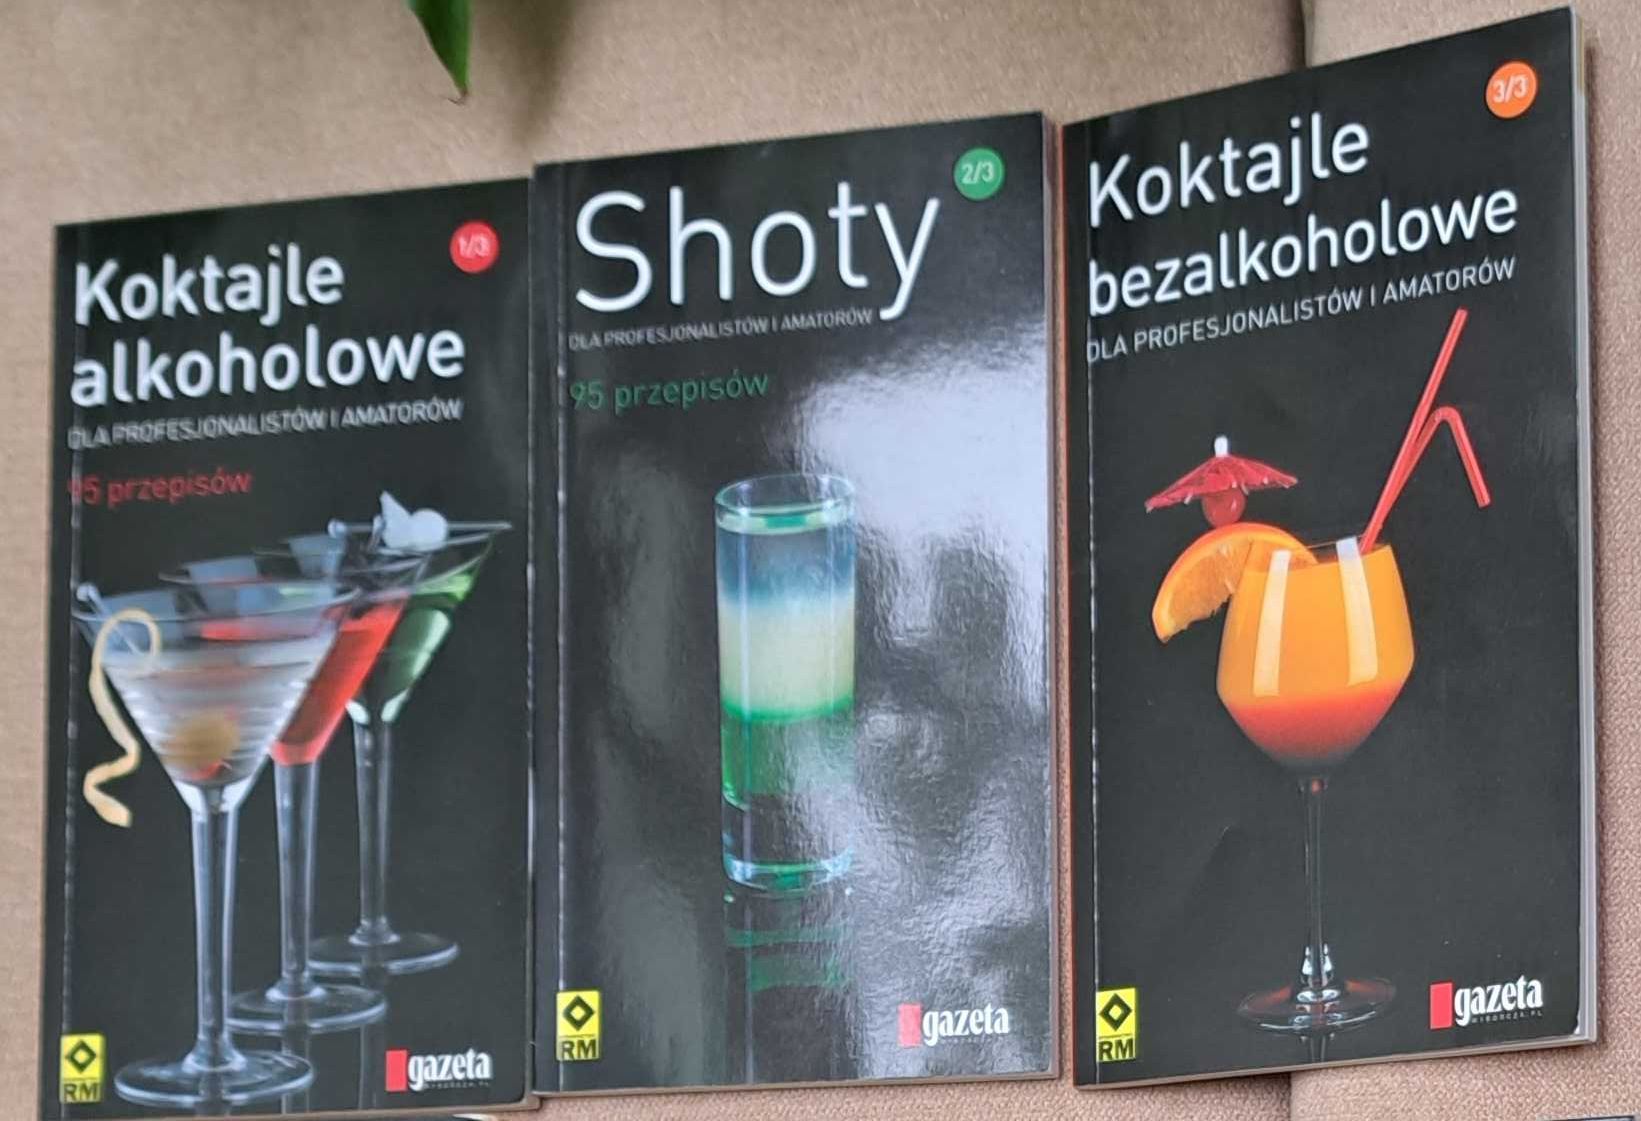 Koktajle alkoholowe Shoty Koktajle bezalkoholowe dla profesjonalistów